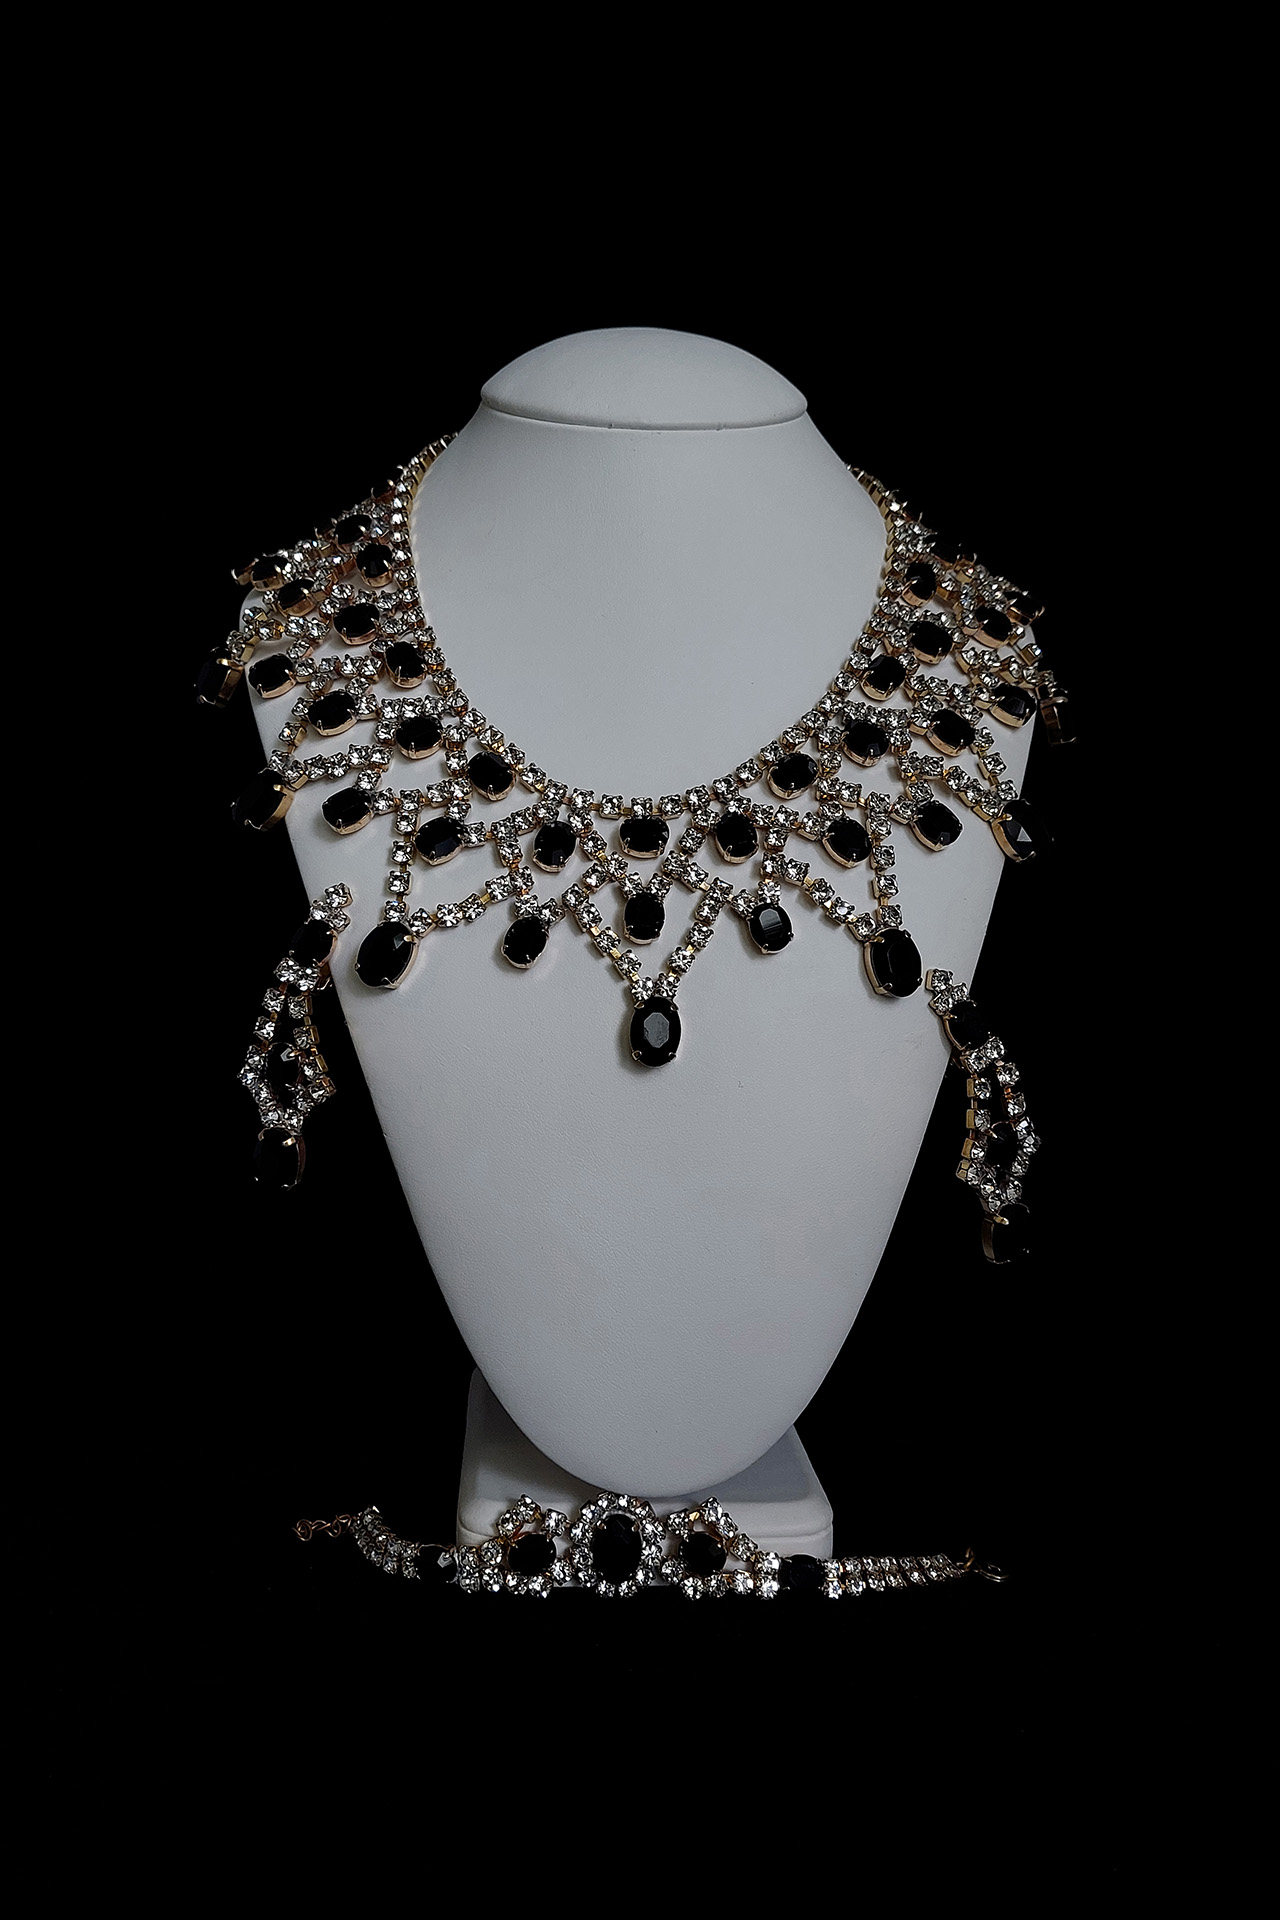 Black luxury designer necklace, bracelet and earrings